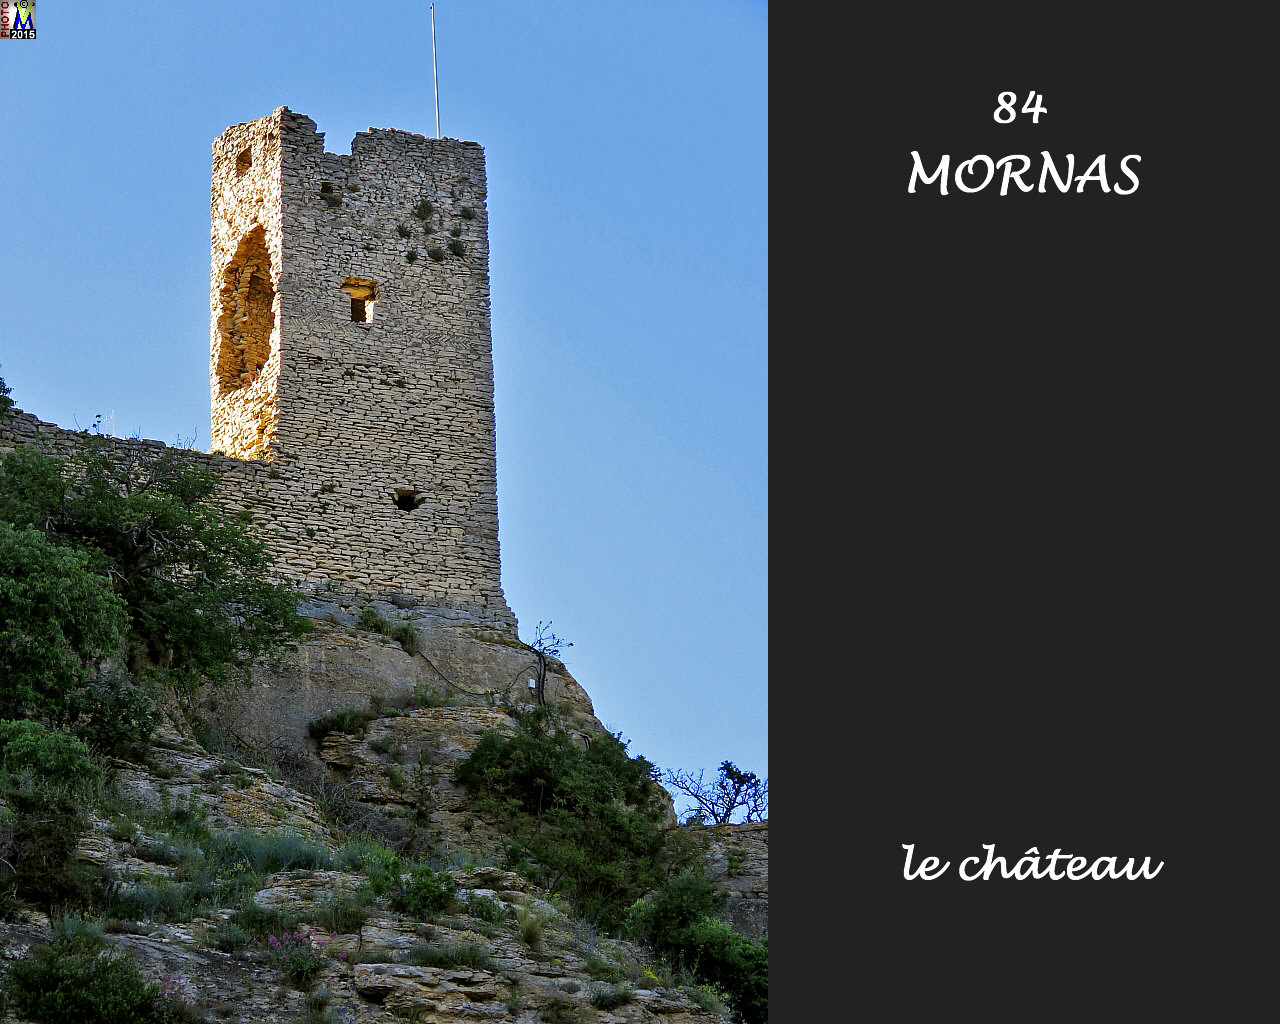 84MORNAS_chateau_124.jpg